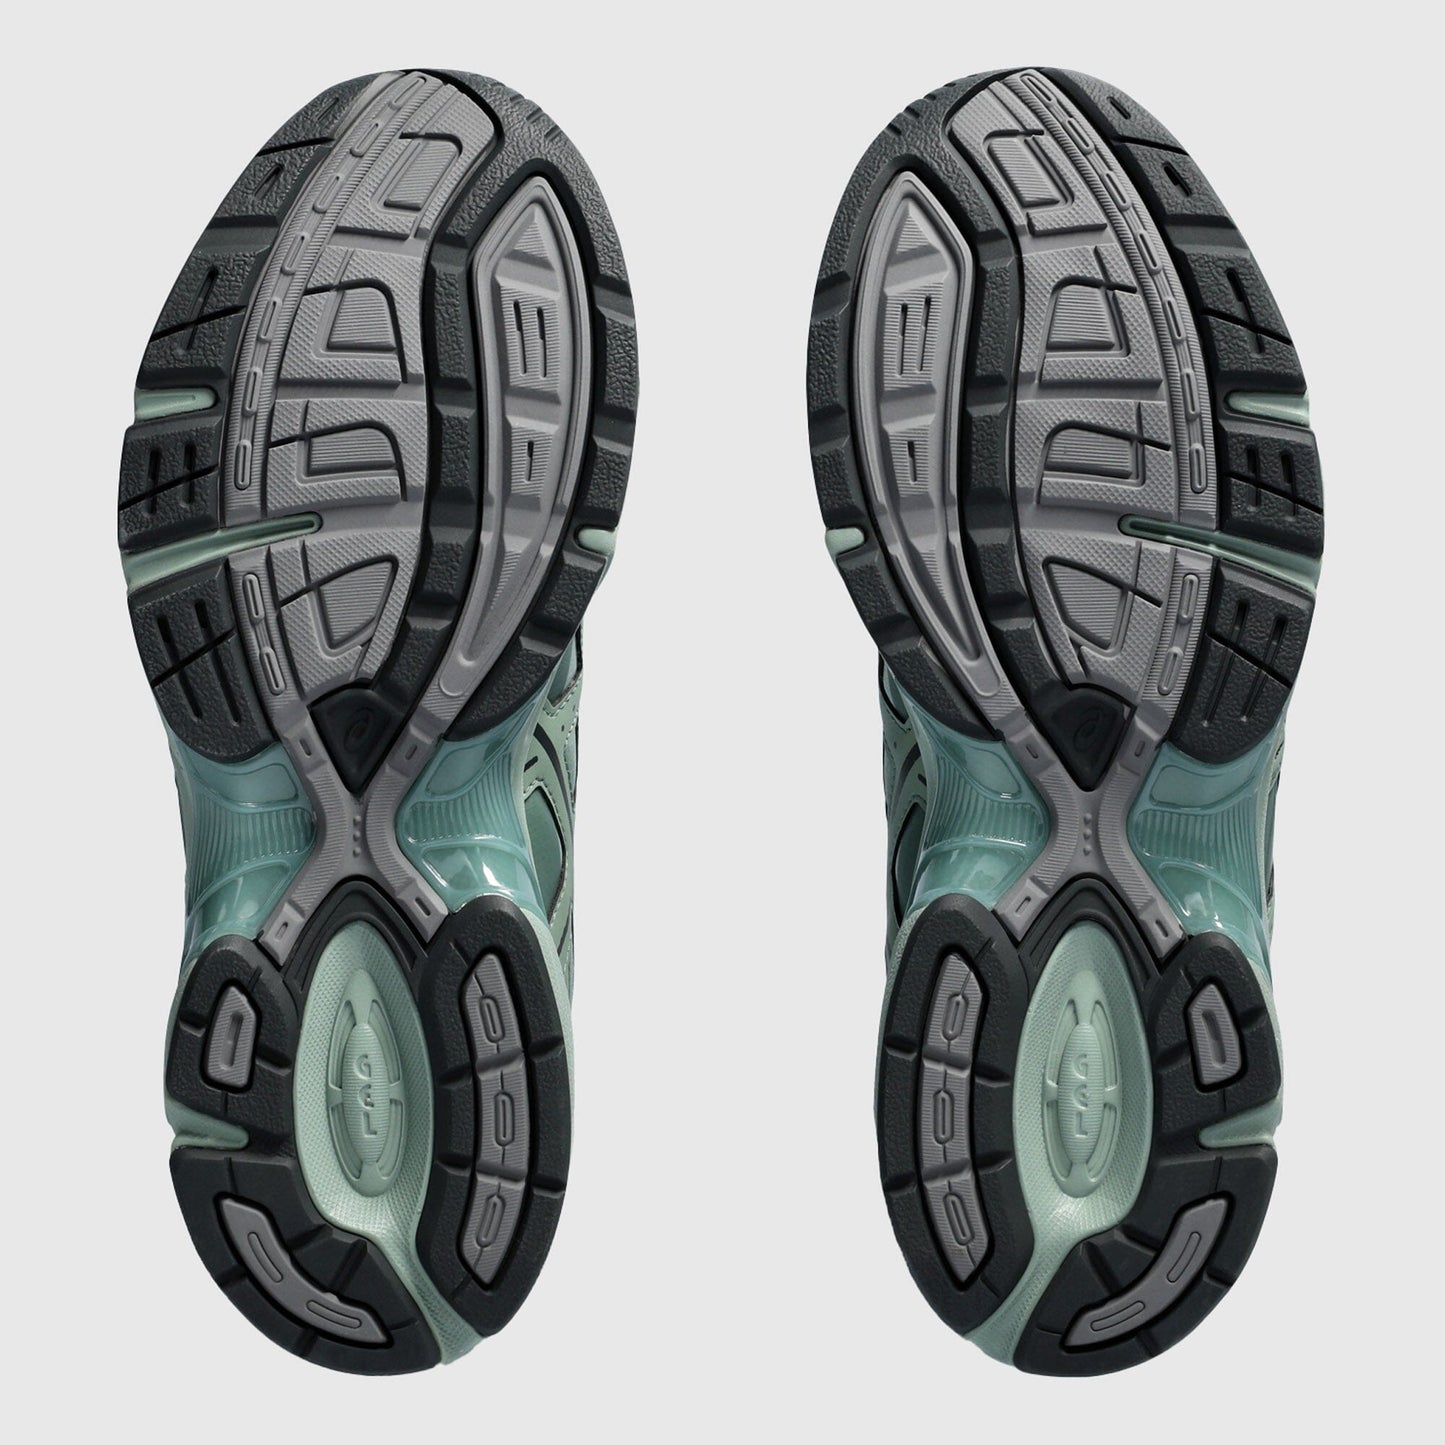 Asics Gel-1130 NS - Slate Grey / Graphite Grey Sneakers Asics 